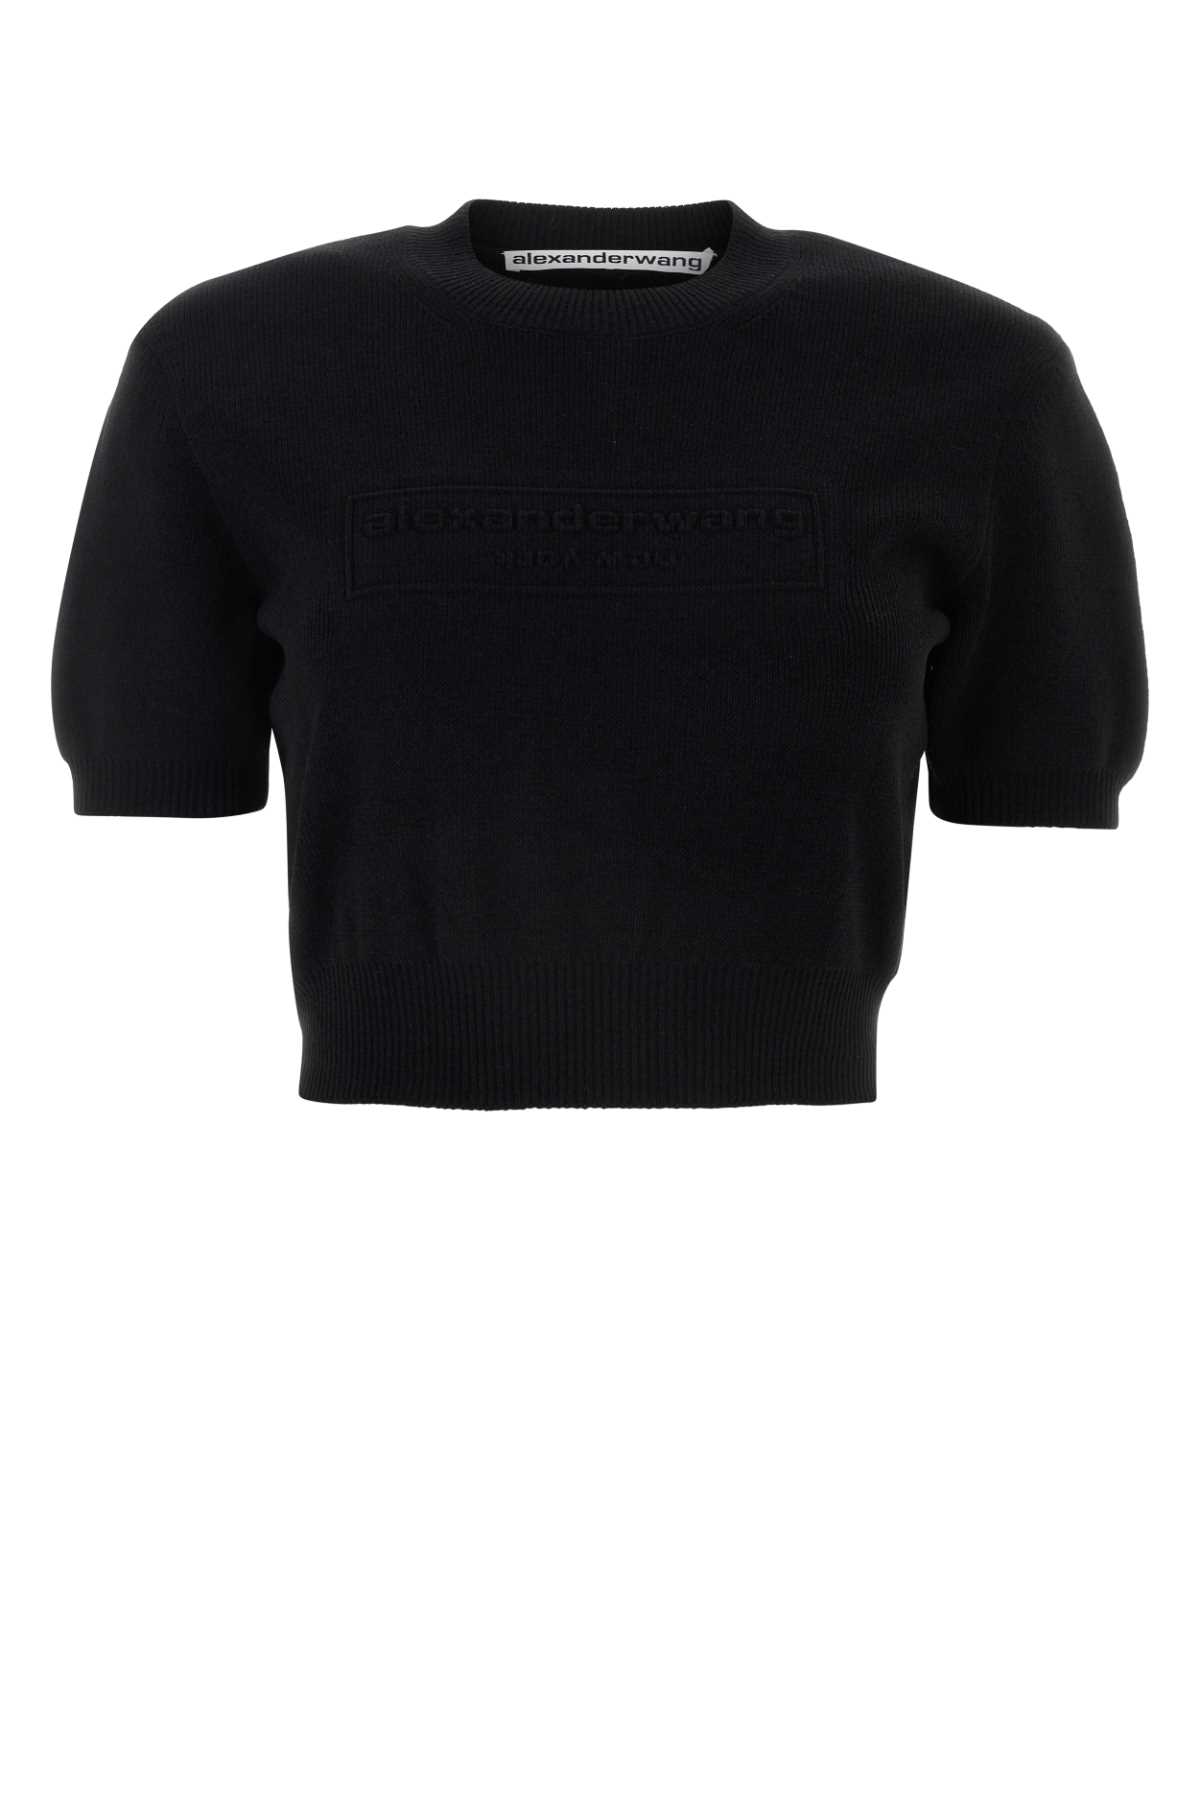 Alexander Wang Black Stretch Polyester Blend Sweater